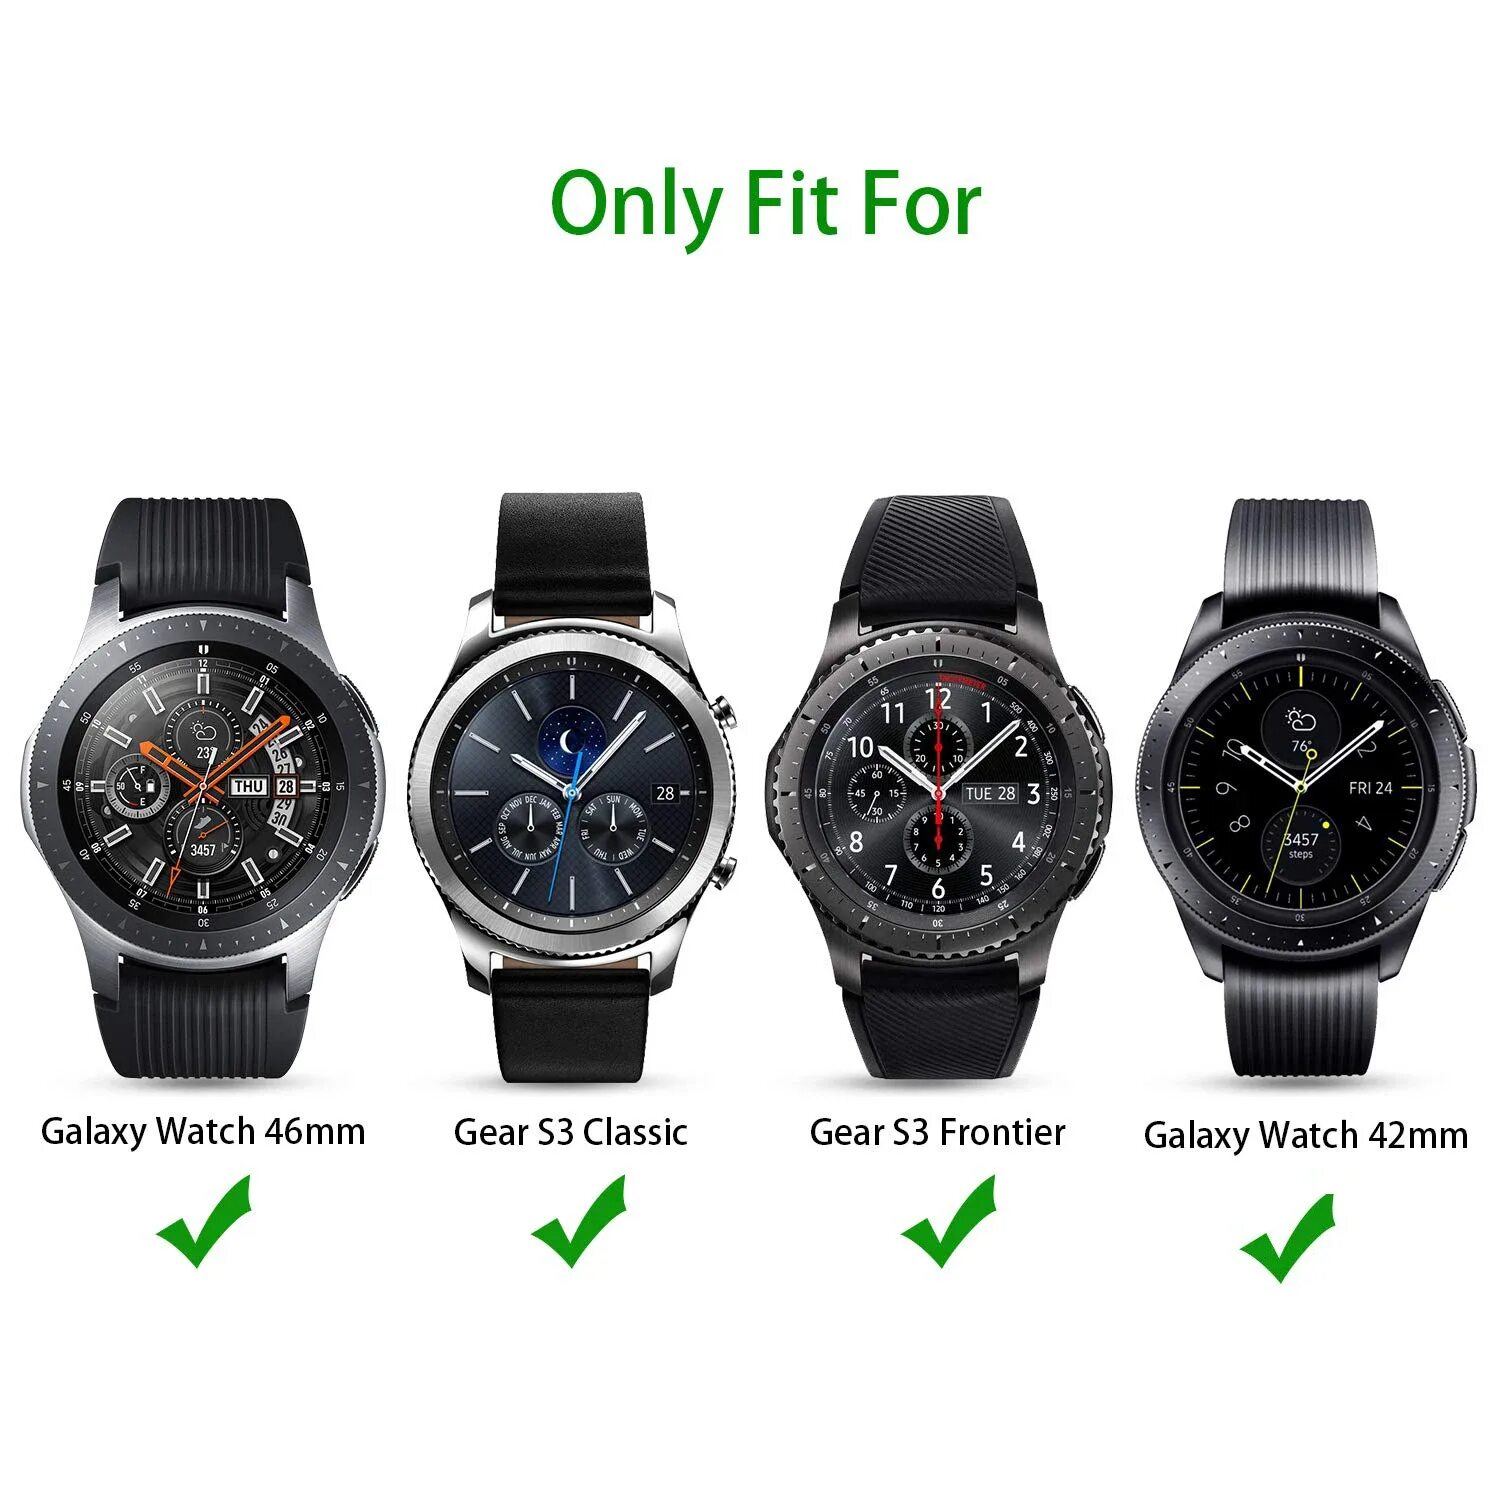 Samsung Galaxy watch Gear s3 Classic. Samsung Galaxy watch 46mm vs Gear s3. Samsung Galaxy watch 42мм. Samsung Galaxy watch 46mm. Сравнение часов самсунг